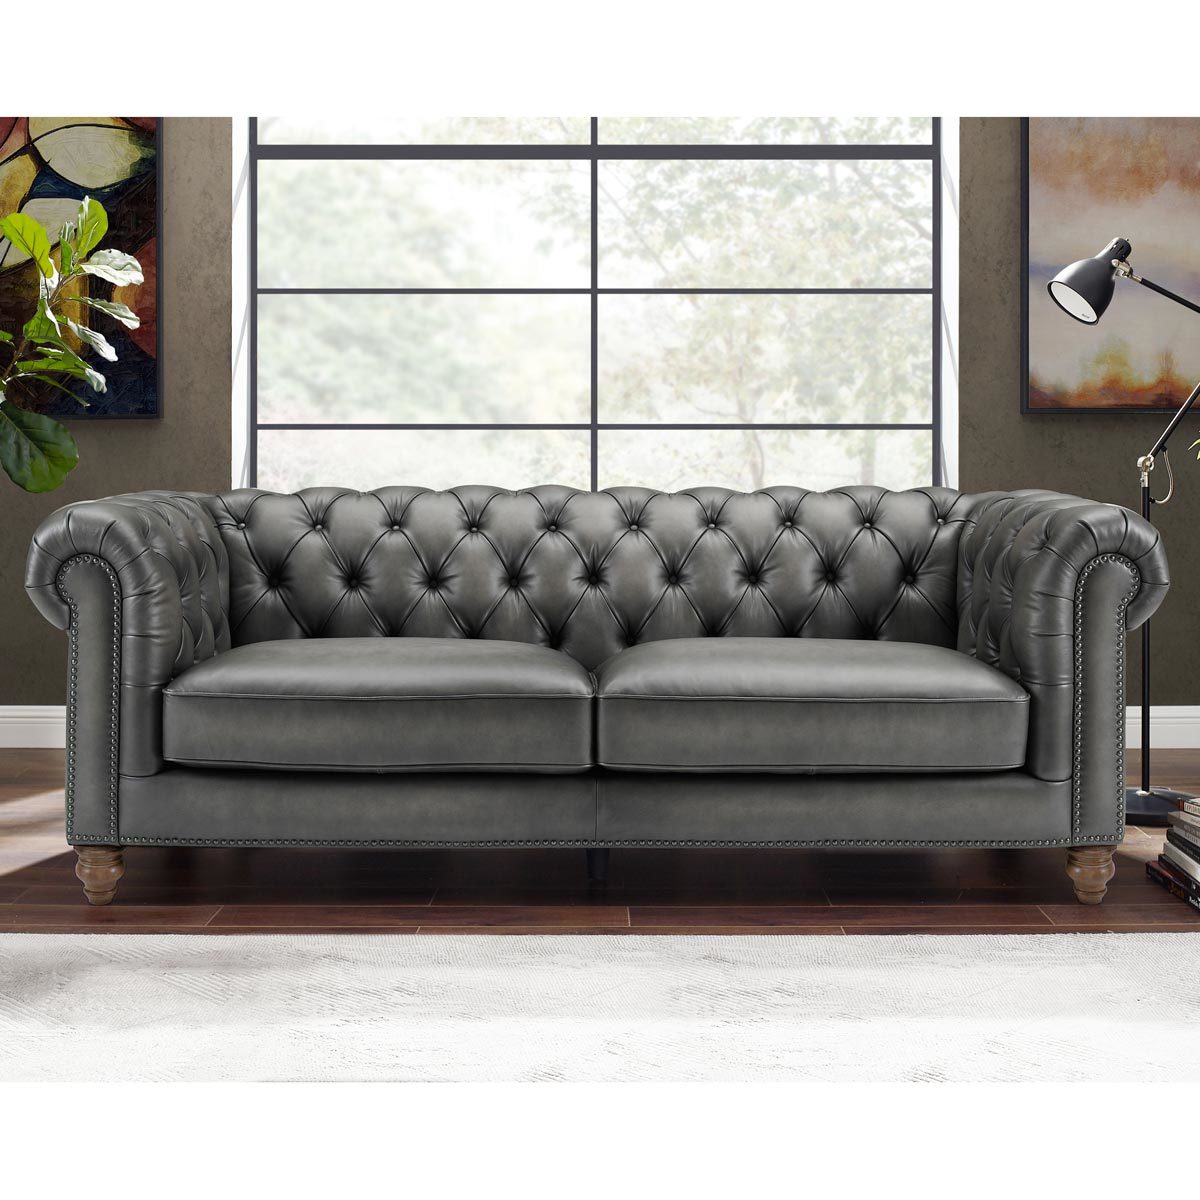 Allington 3 Seater Grey Leather Chesterfield Sofa | Costc...